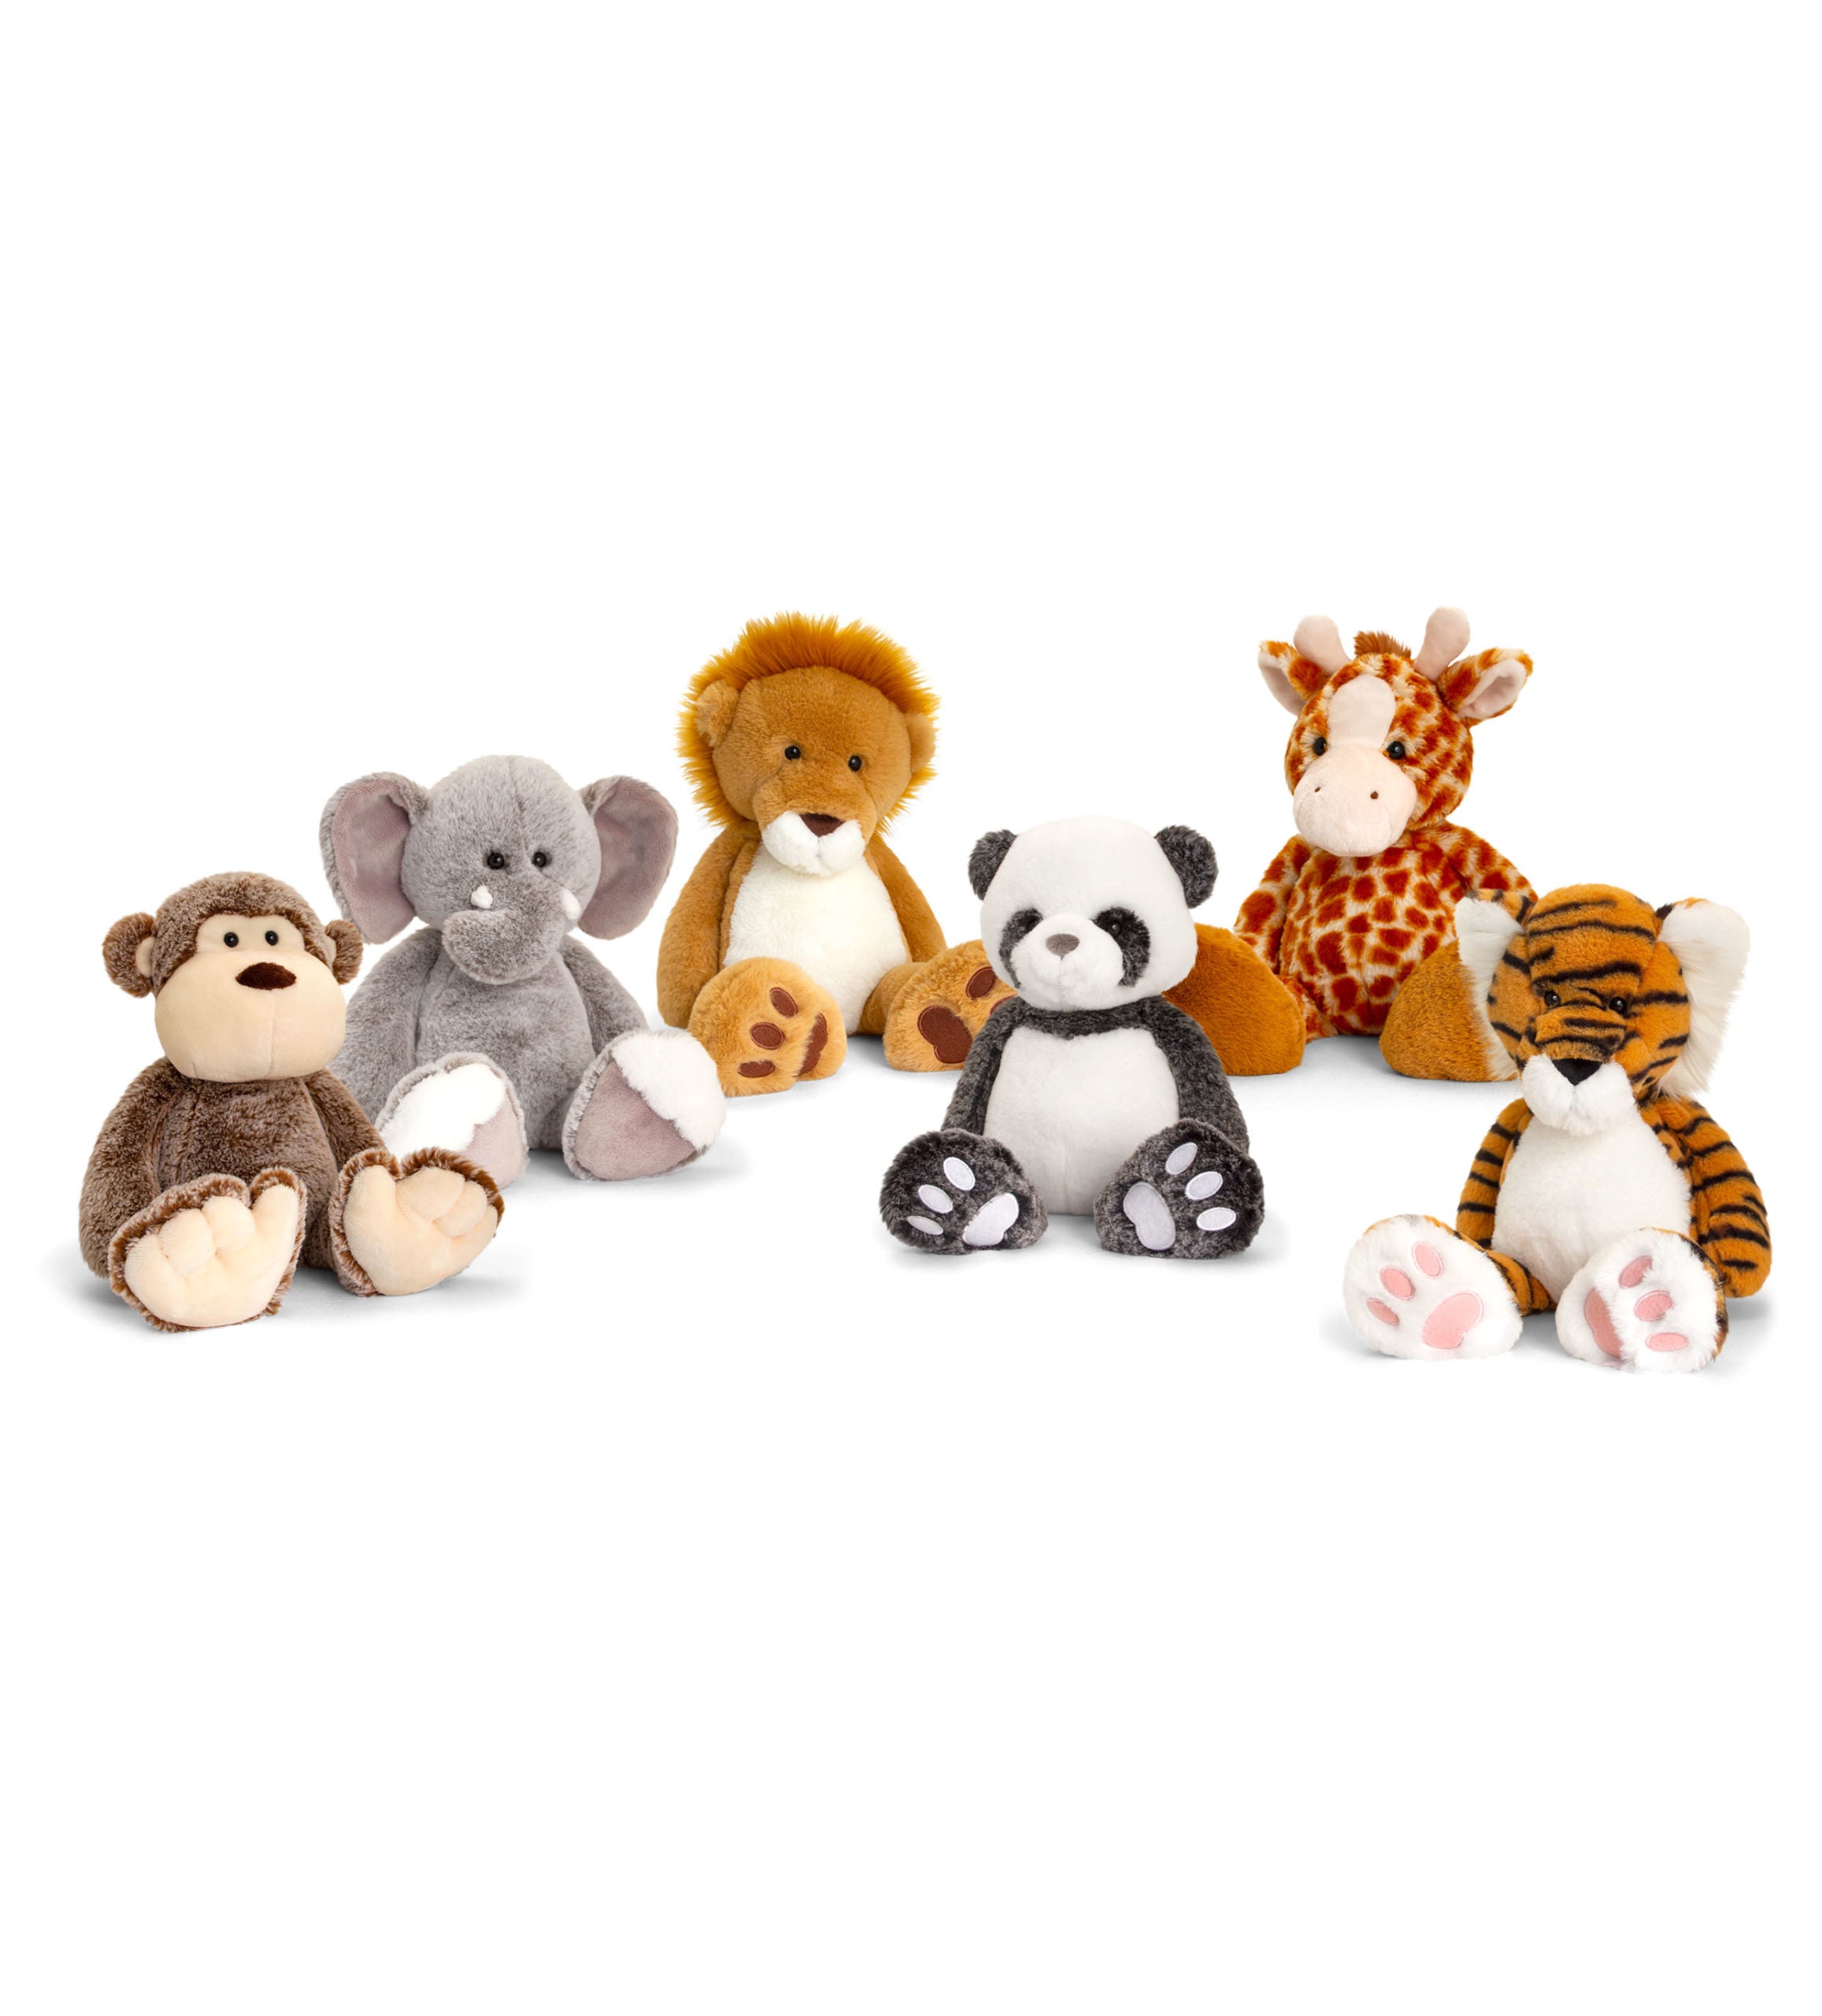 Eco friendly Soft Plush Toys - 'Love to Hug' 18cm Soft Wild